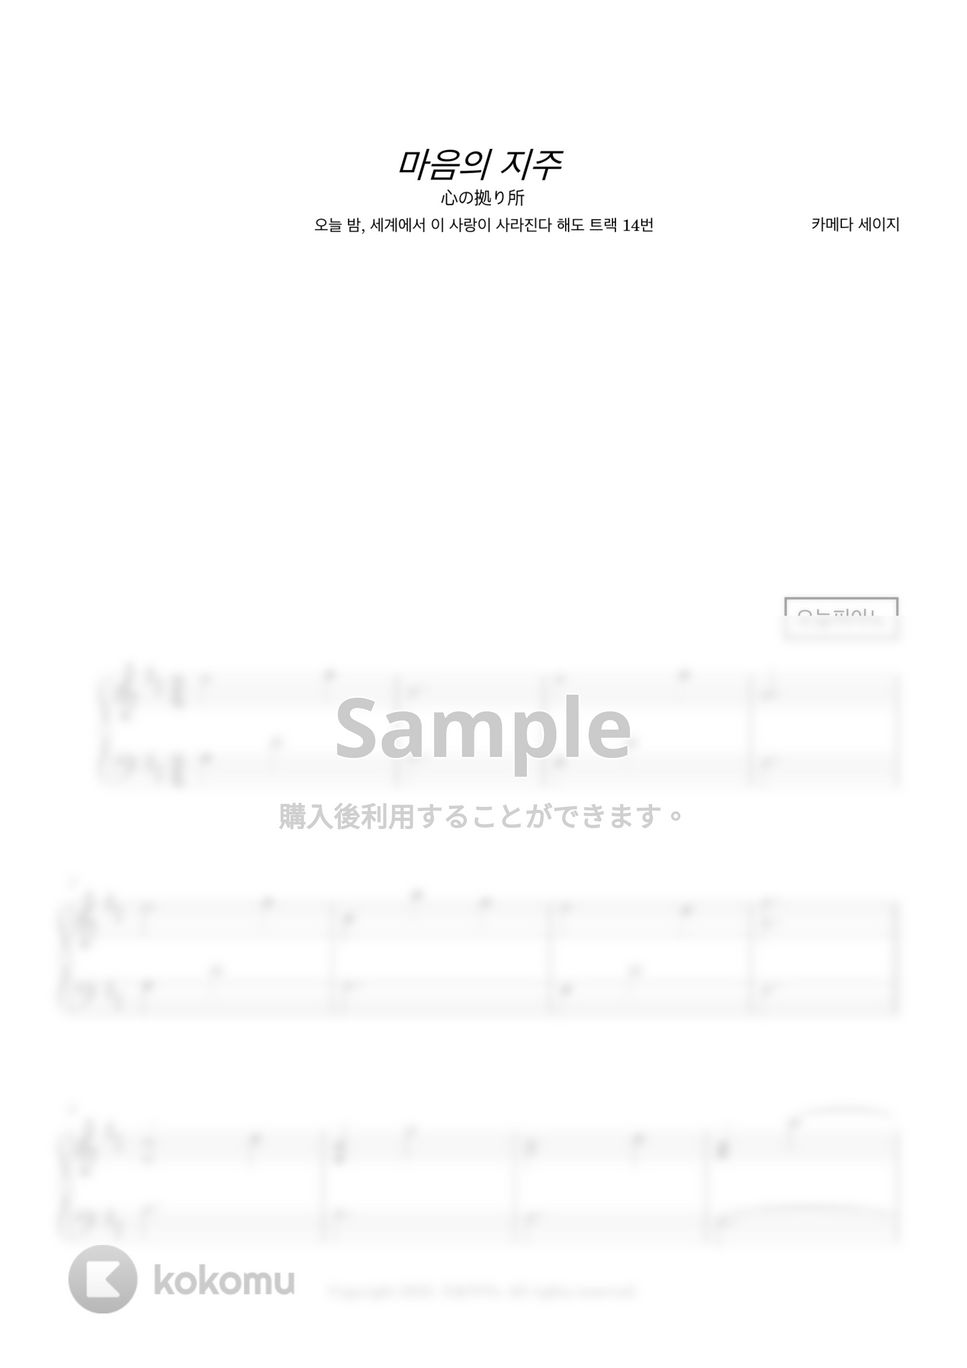 Seiji Kameda - 心の拠り所 (今夜、世界からこの恋が消えても track 14) by 今日ピアノ(Oneul Piano)